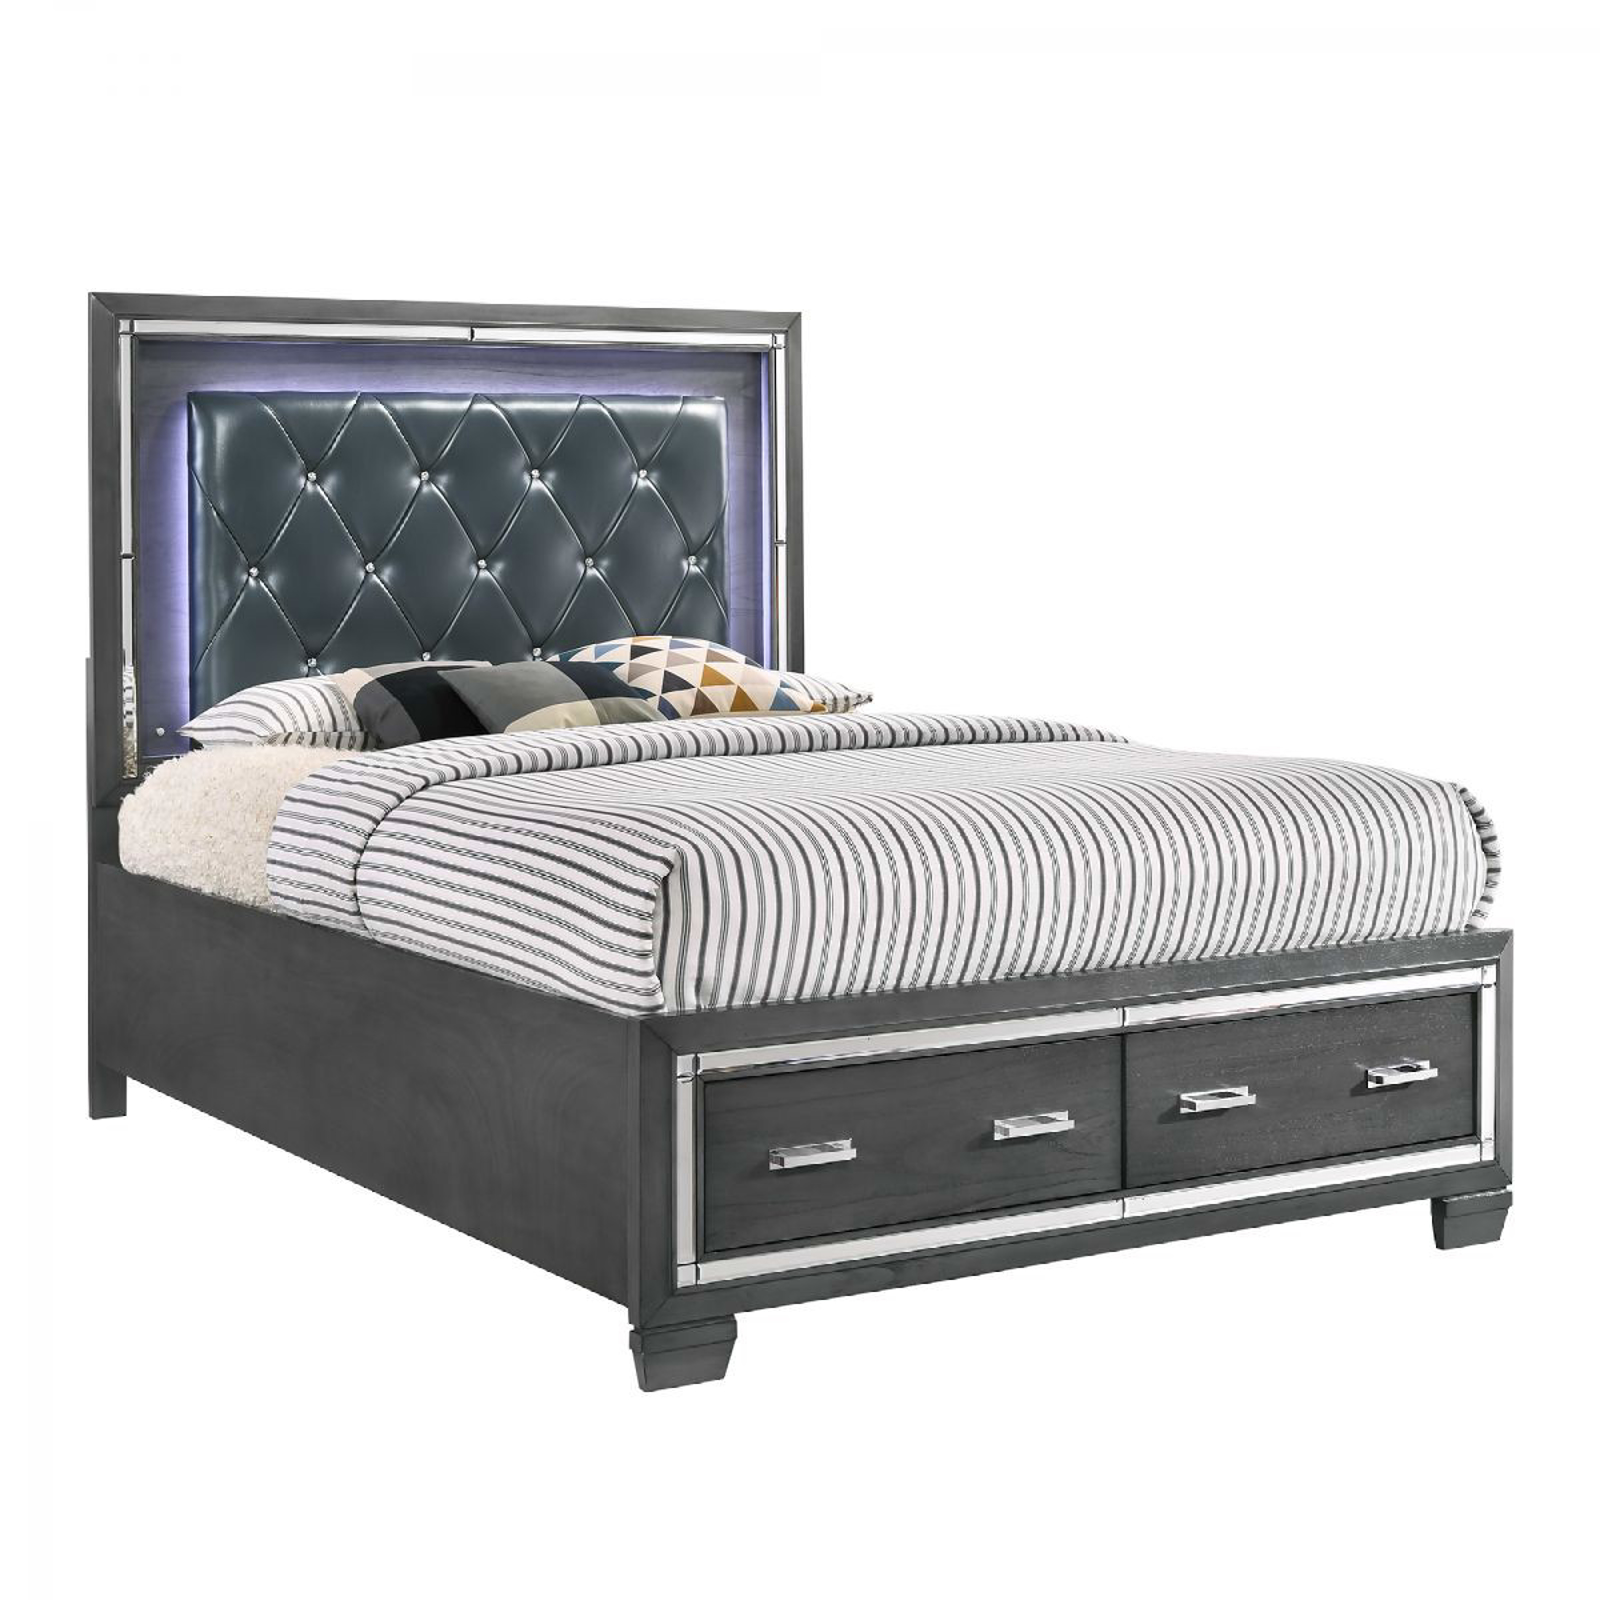 Picture of Titanium Queen Size Bed